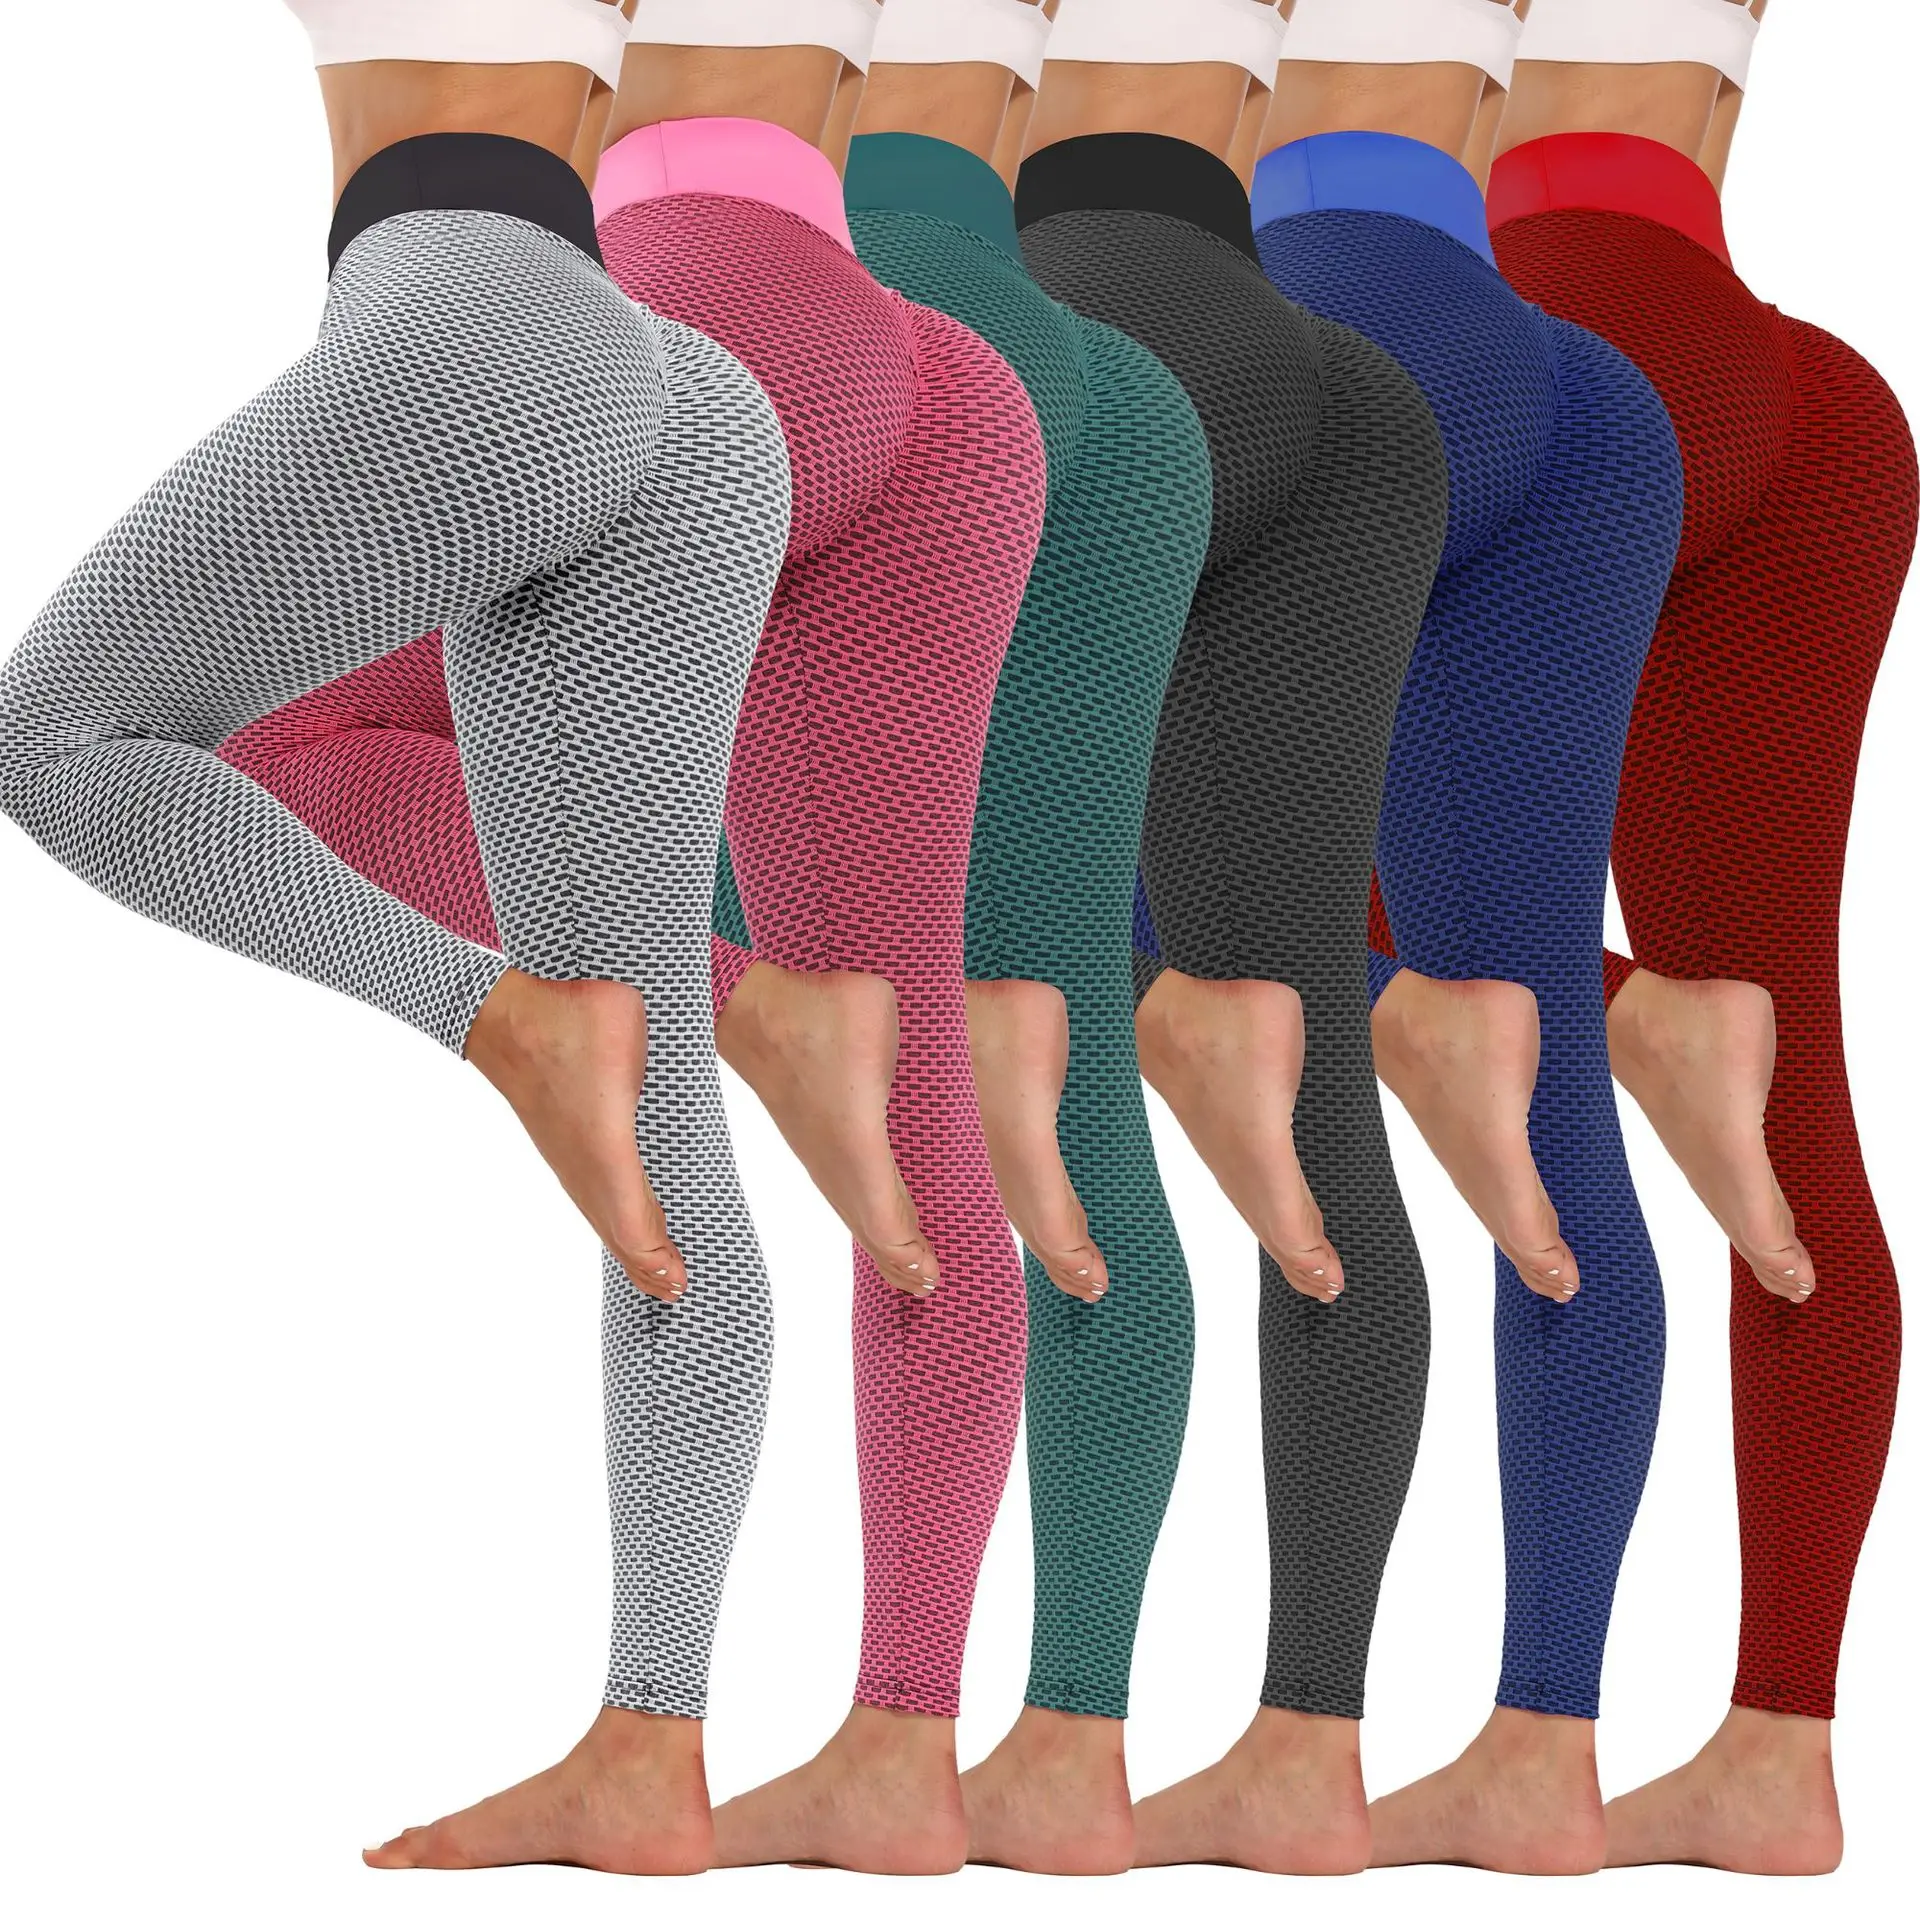 Lulu yoga wear women sports thick fabric peach hip high waist fitness pants jacquard bubble yoga pants